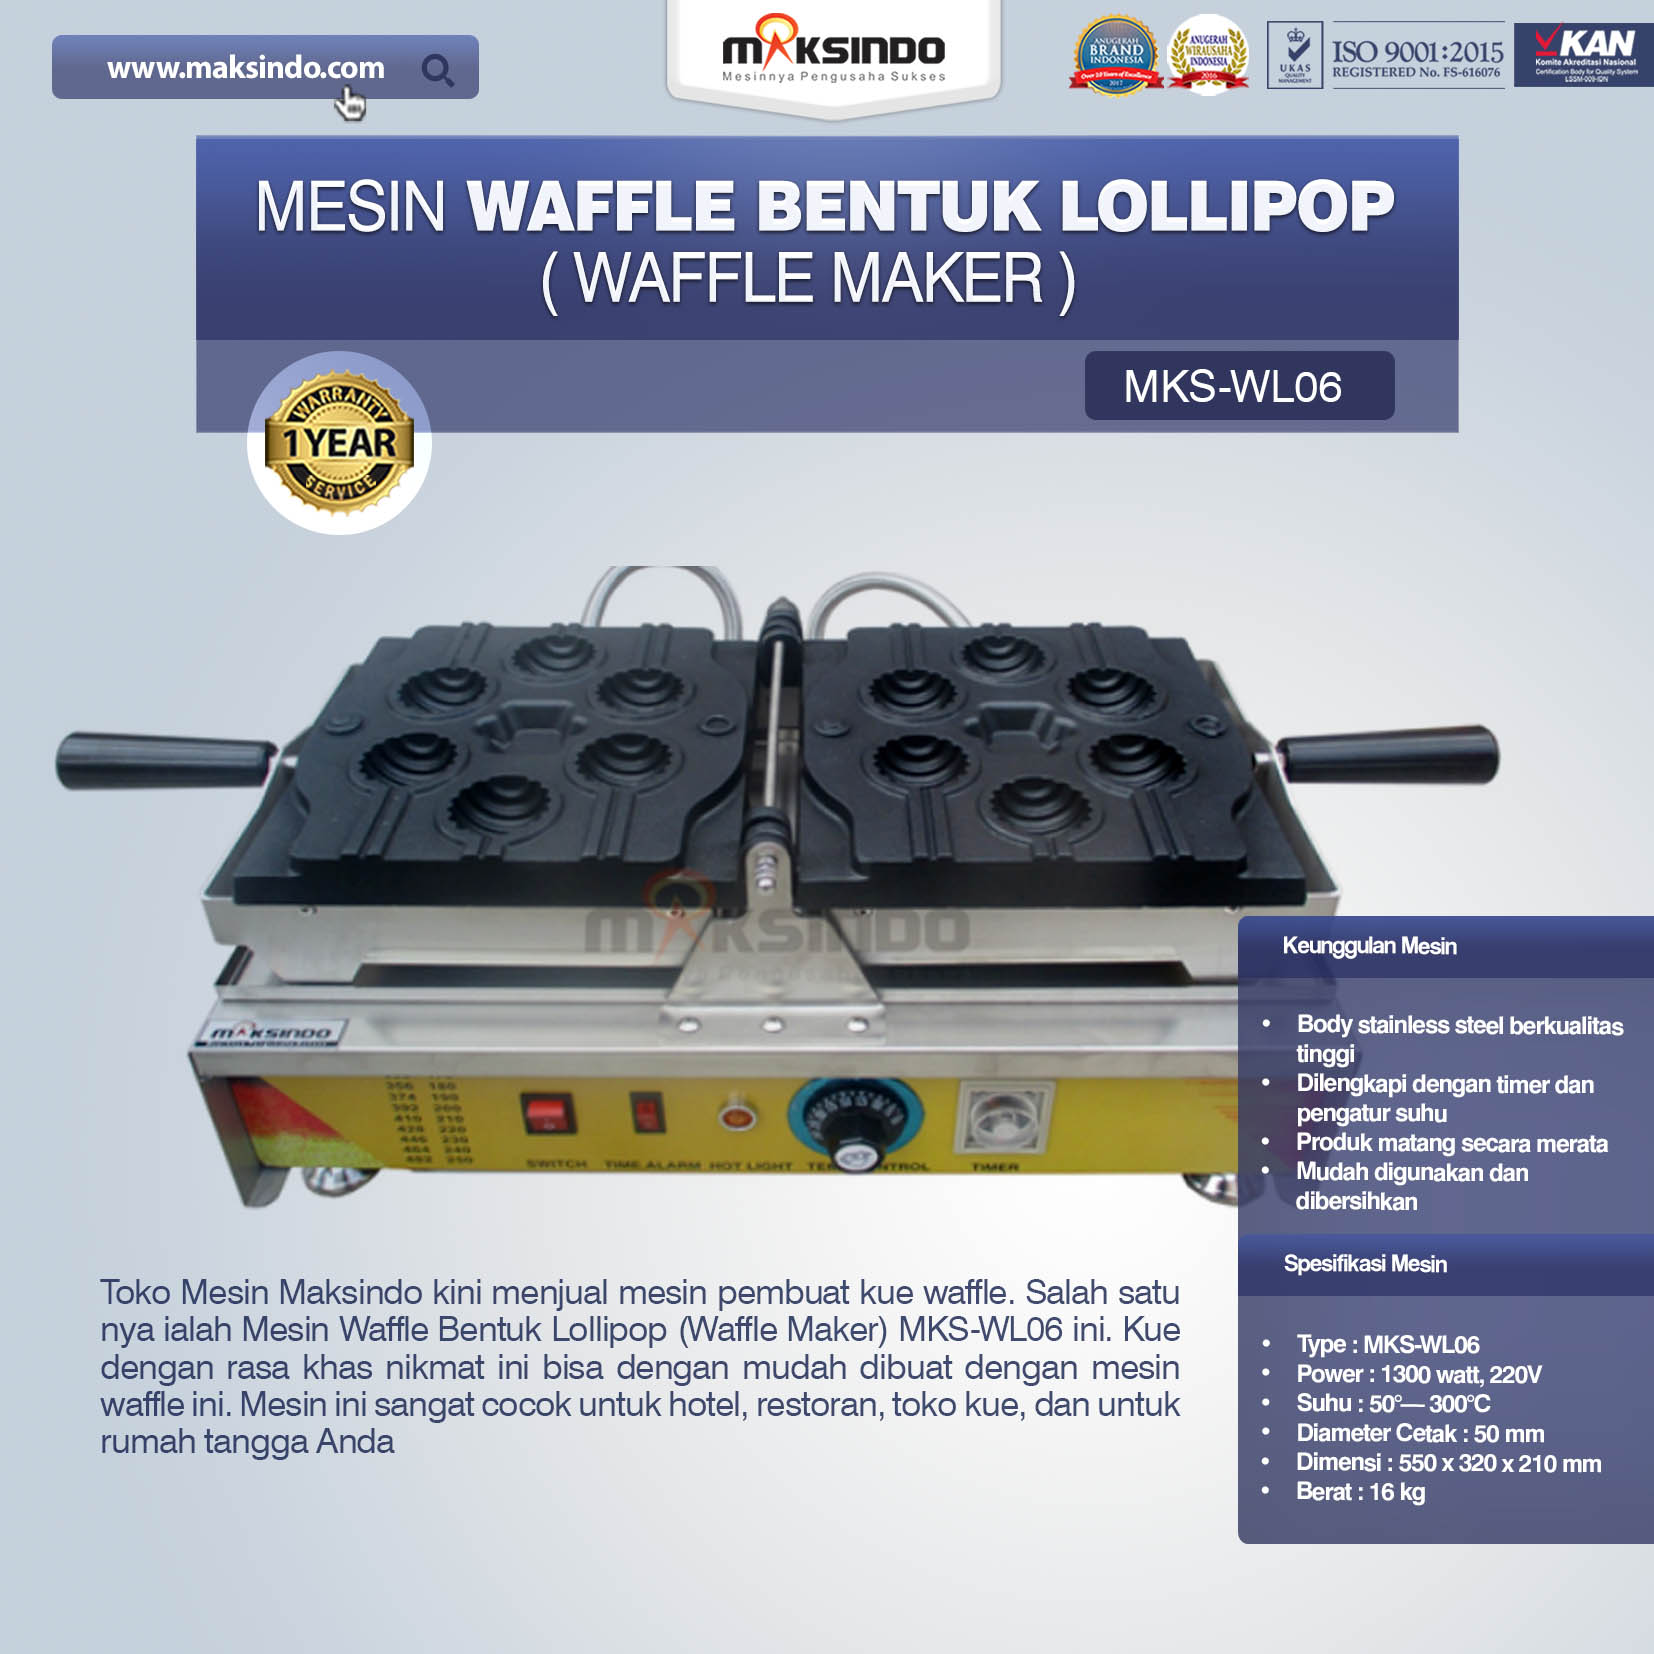 Jual Mesin Waffle Bentuk Lollipop (Waffle Maker) MKS-WL06 di Bali